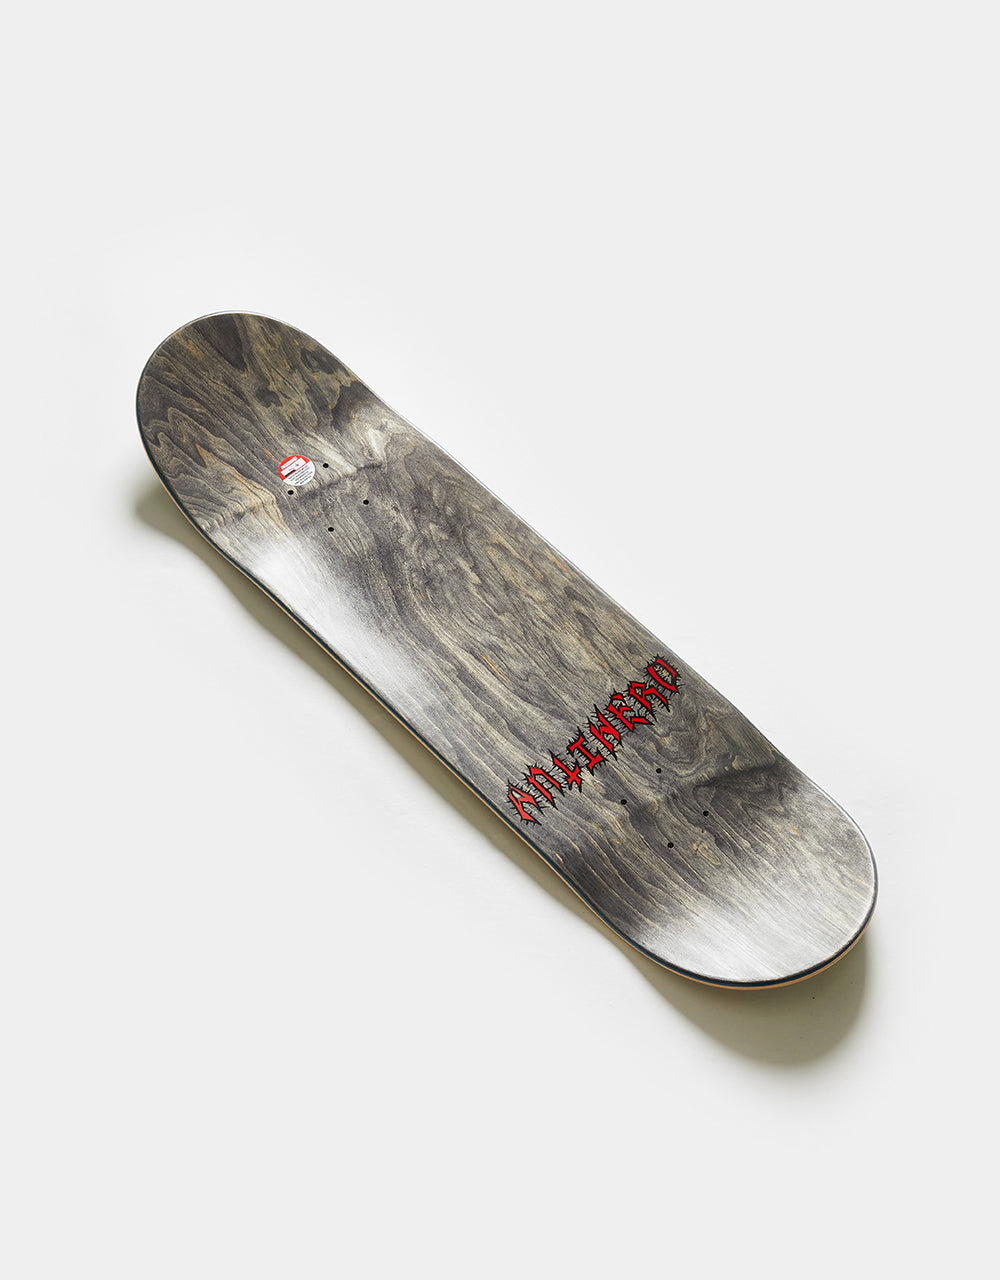 Anti Hero Grant Profane Creation Skateboard Deck - 8.4"